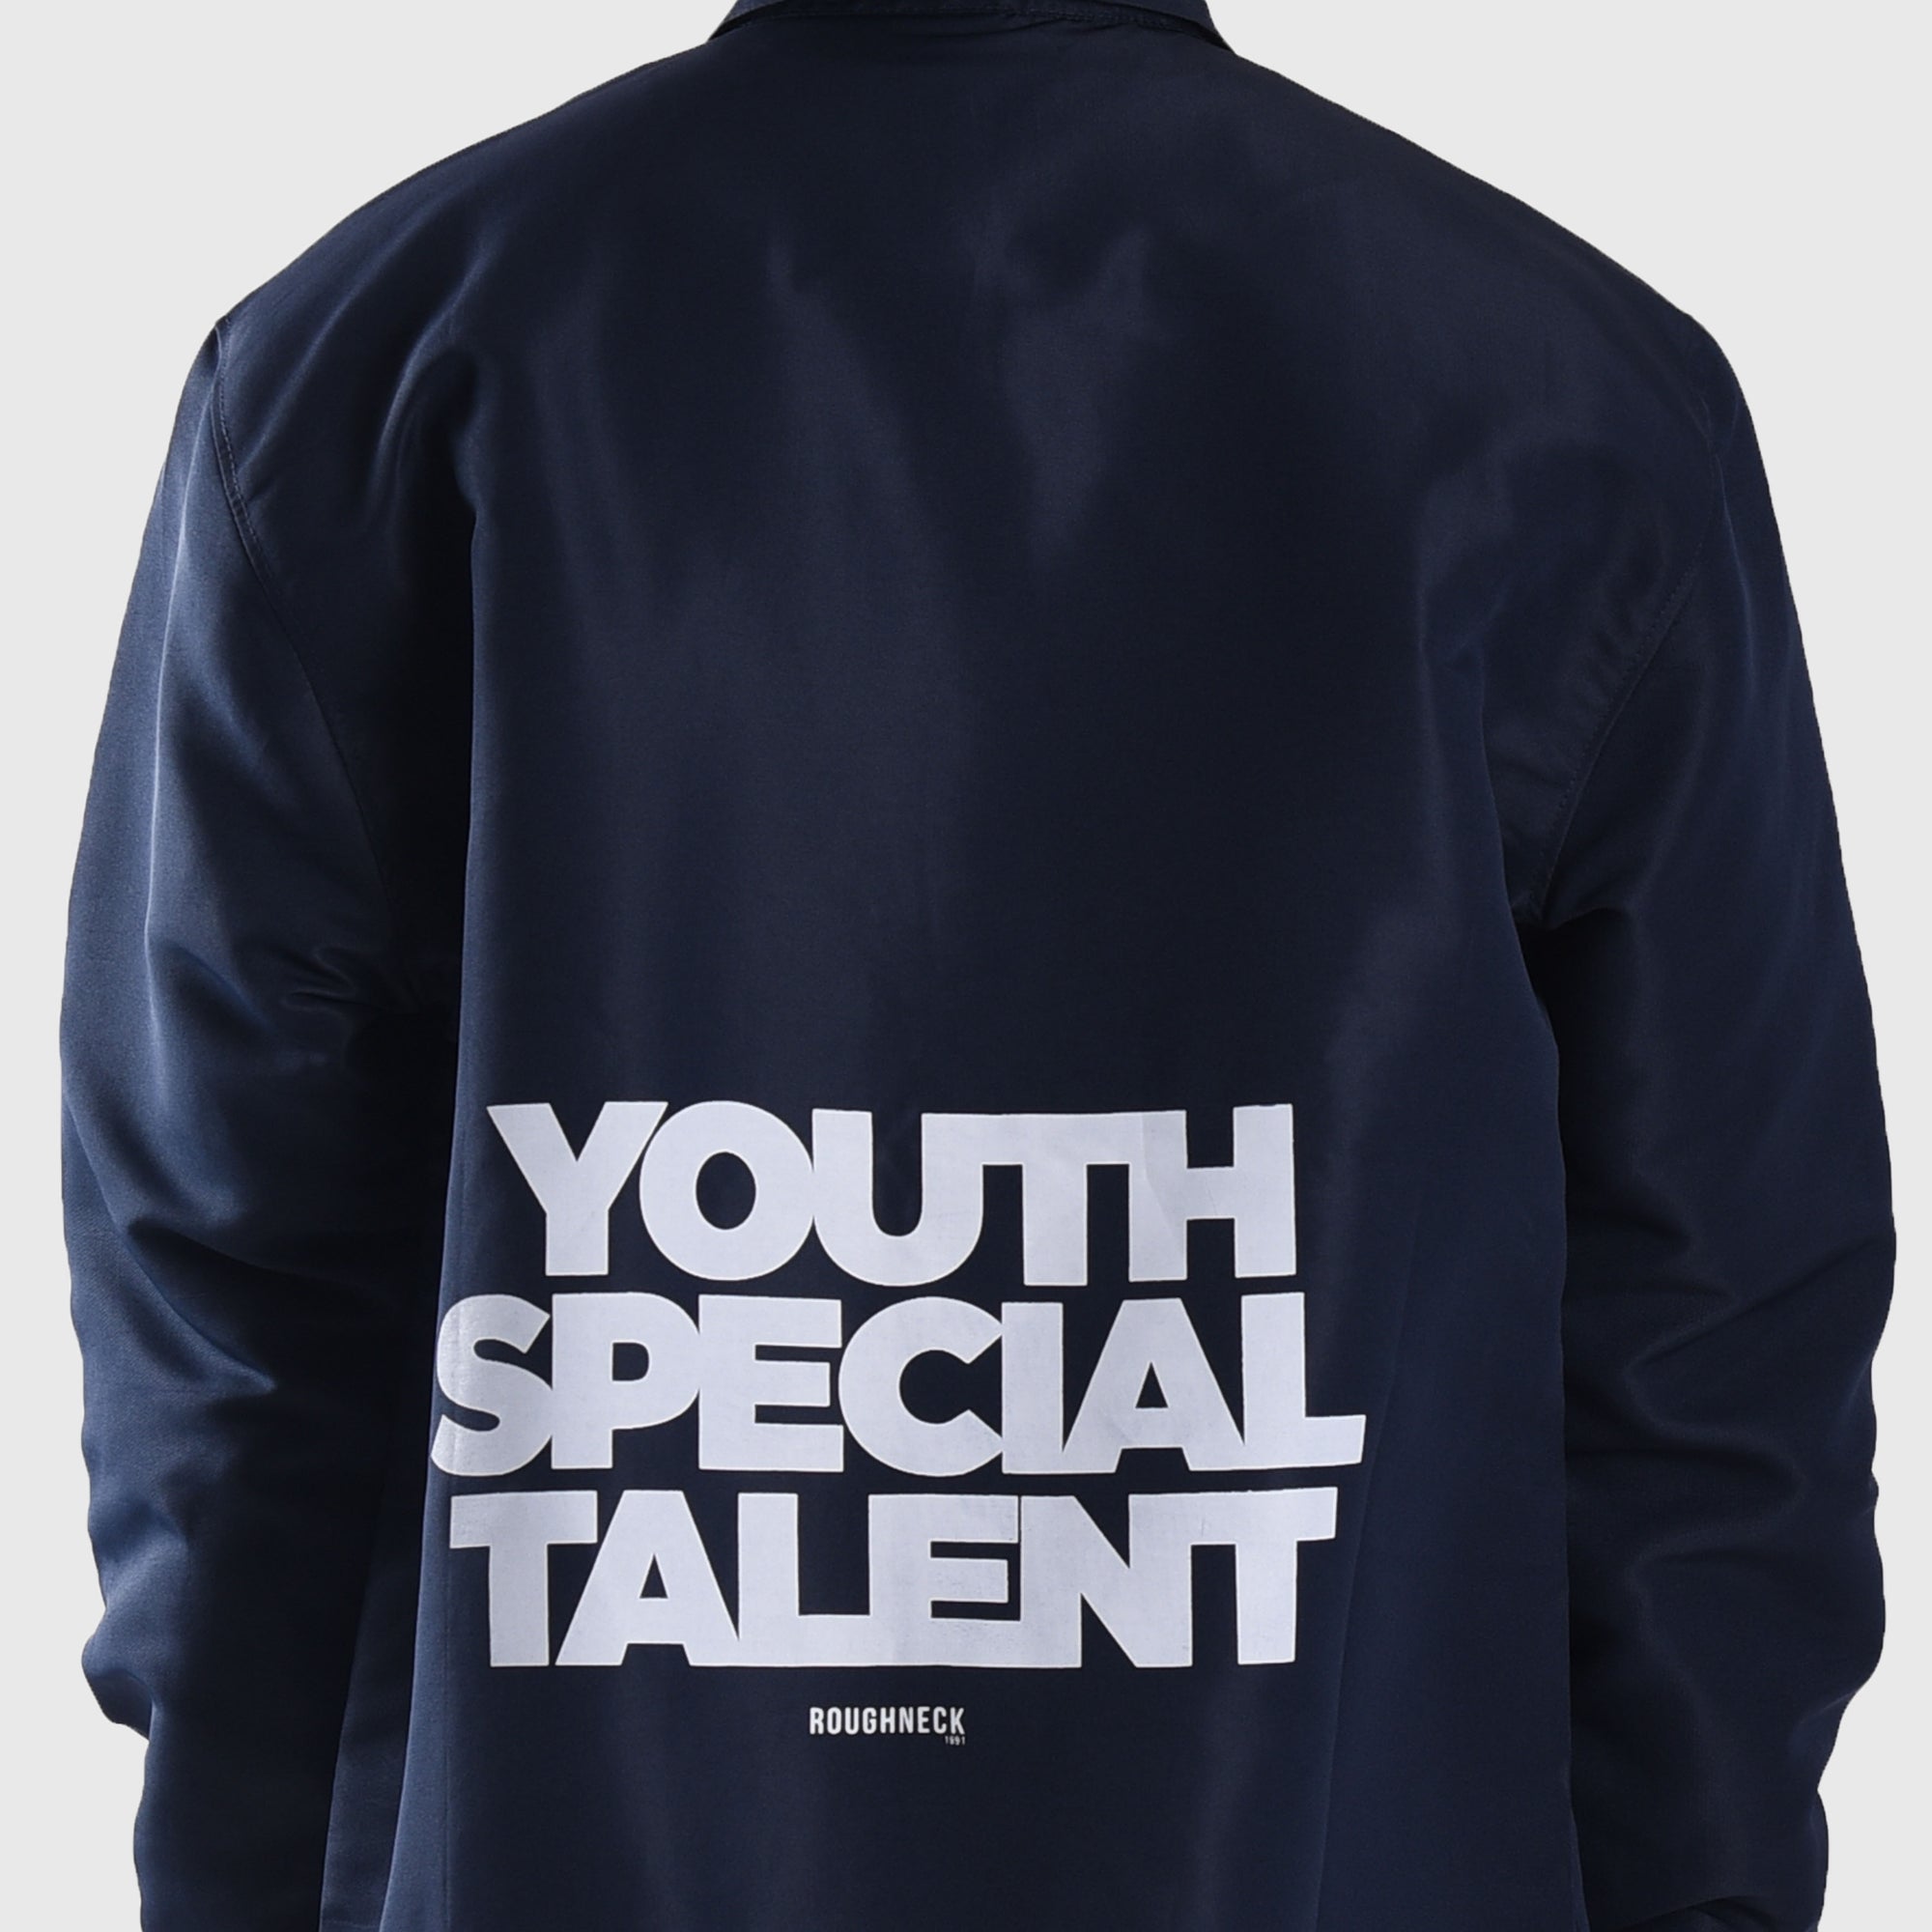 CJ189 Navy Youth Talent Coach Jacket